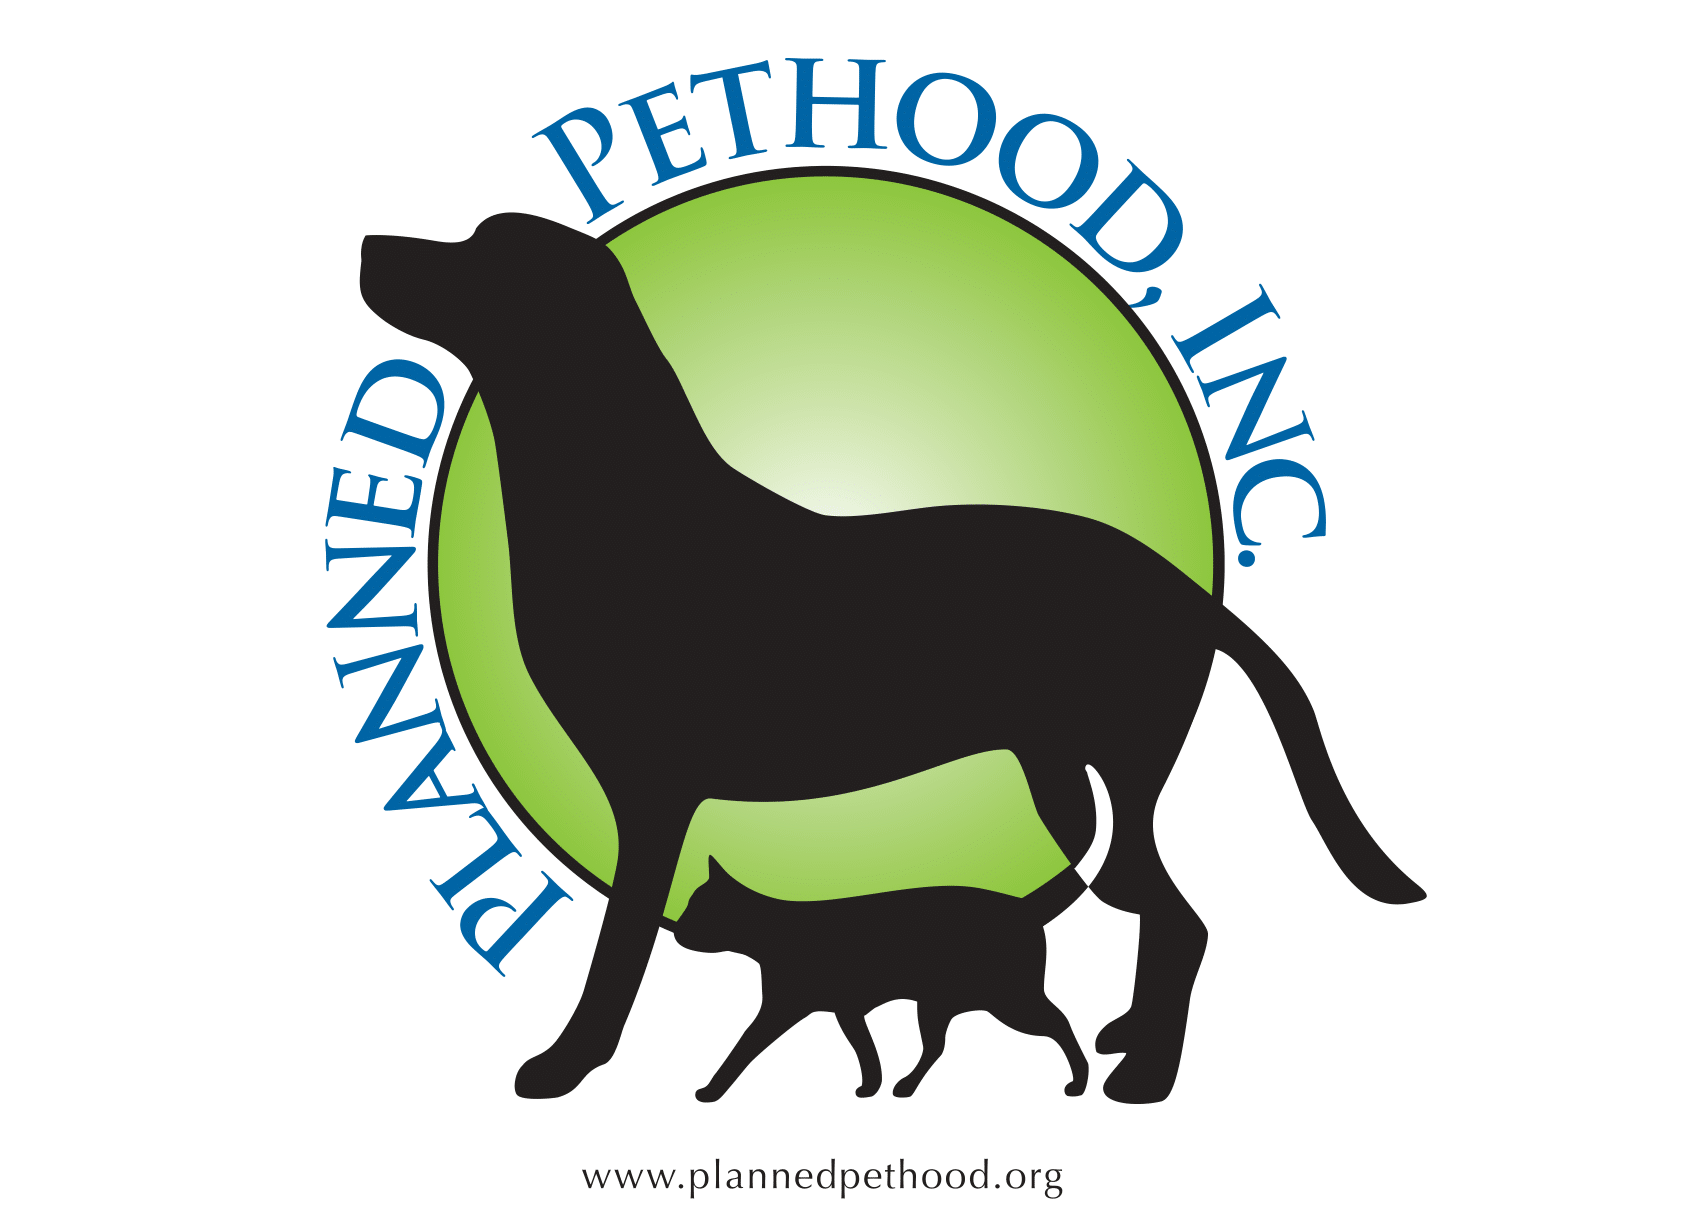 PP - Planned Pethood